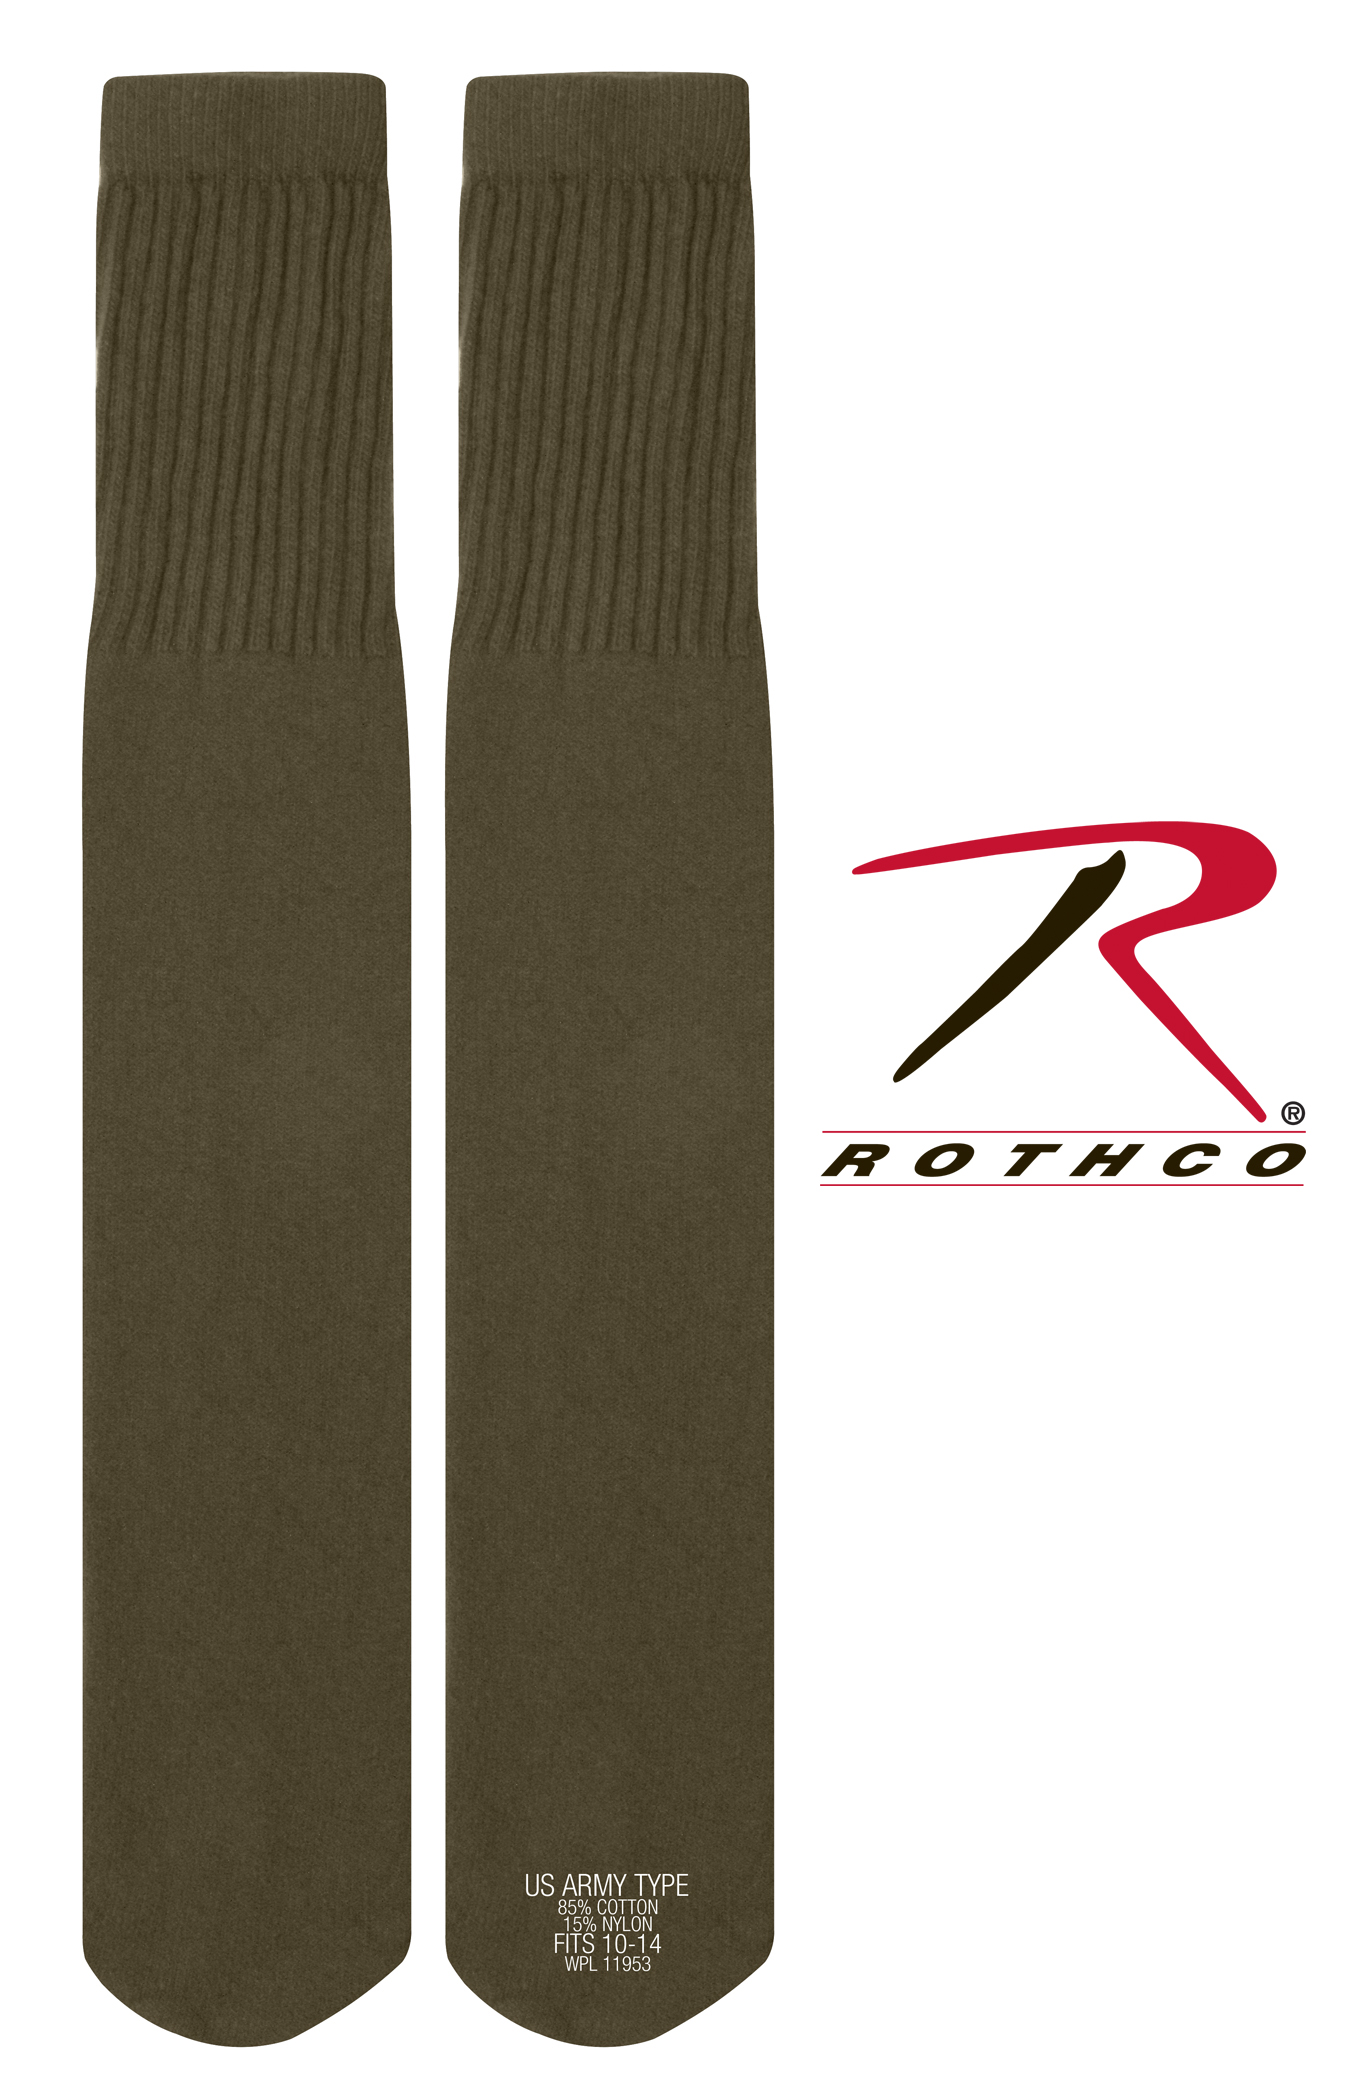 Rothco G.I. Style Tube Socks